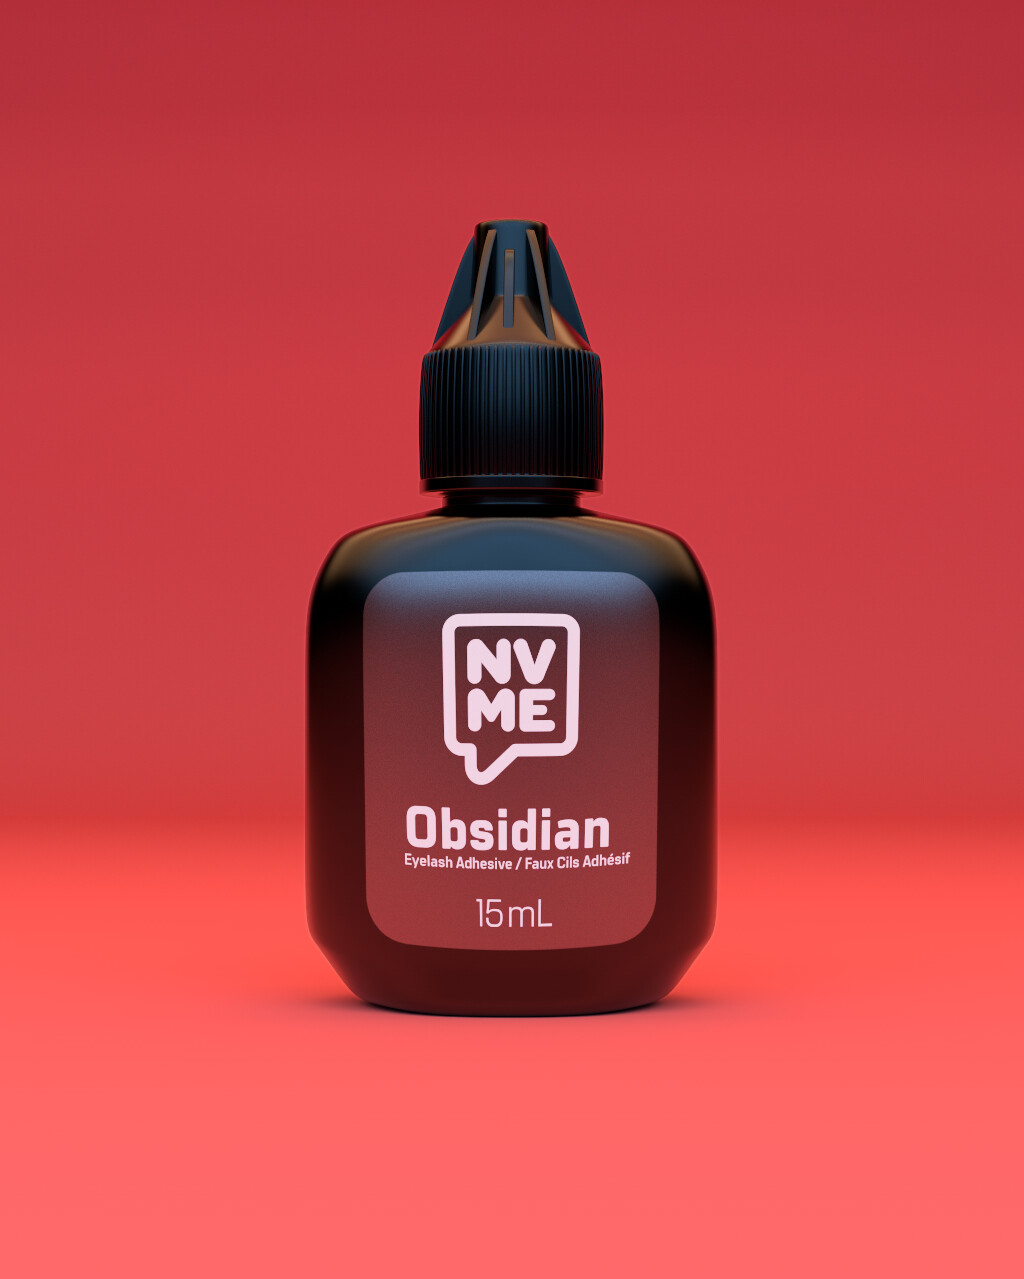 Obsidian Eyelash Extension Adhesive